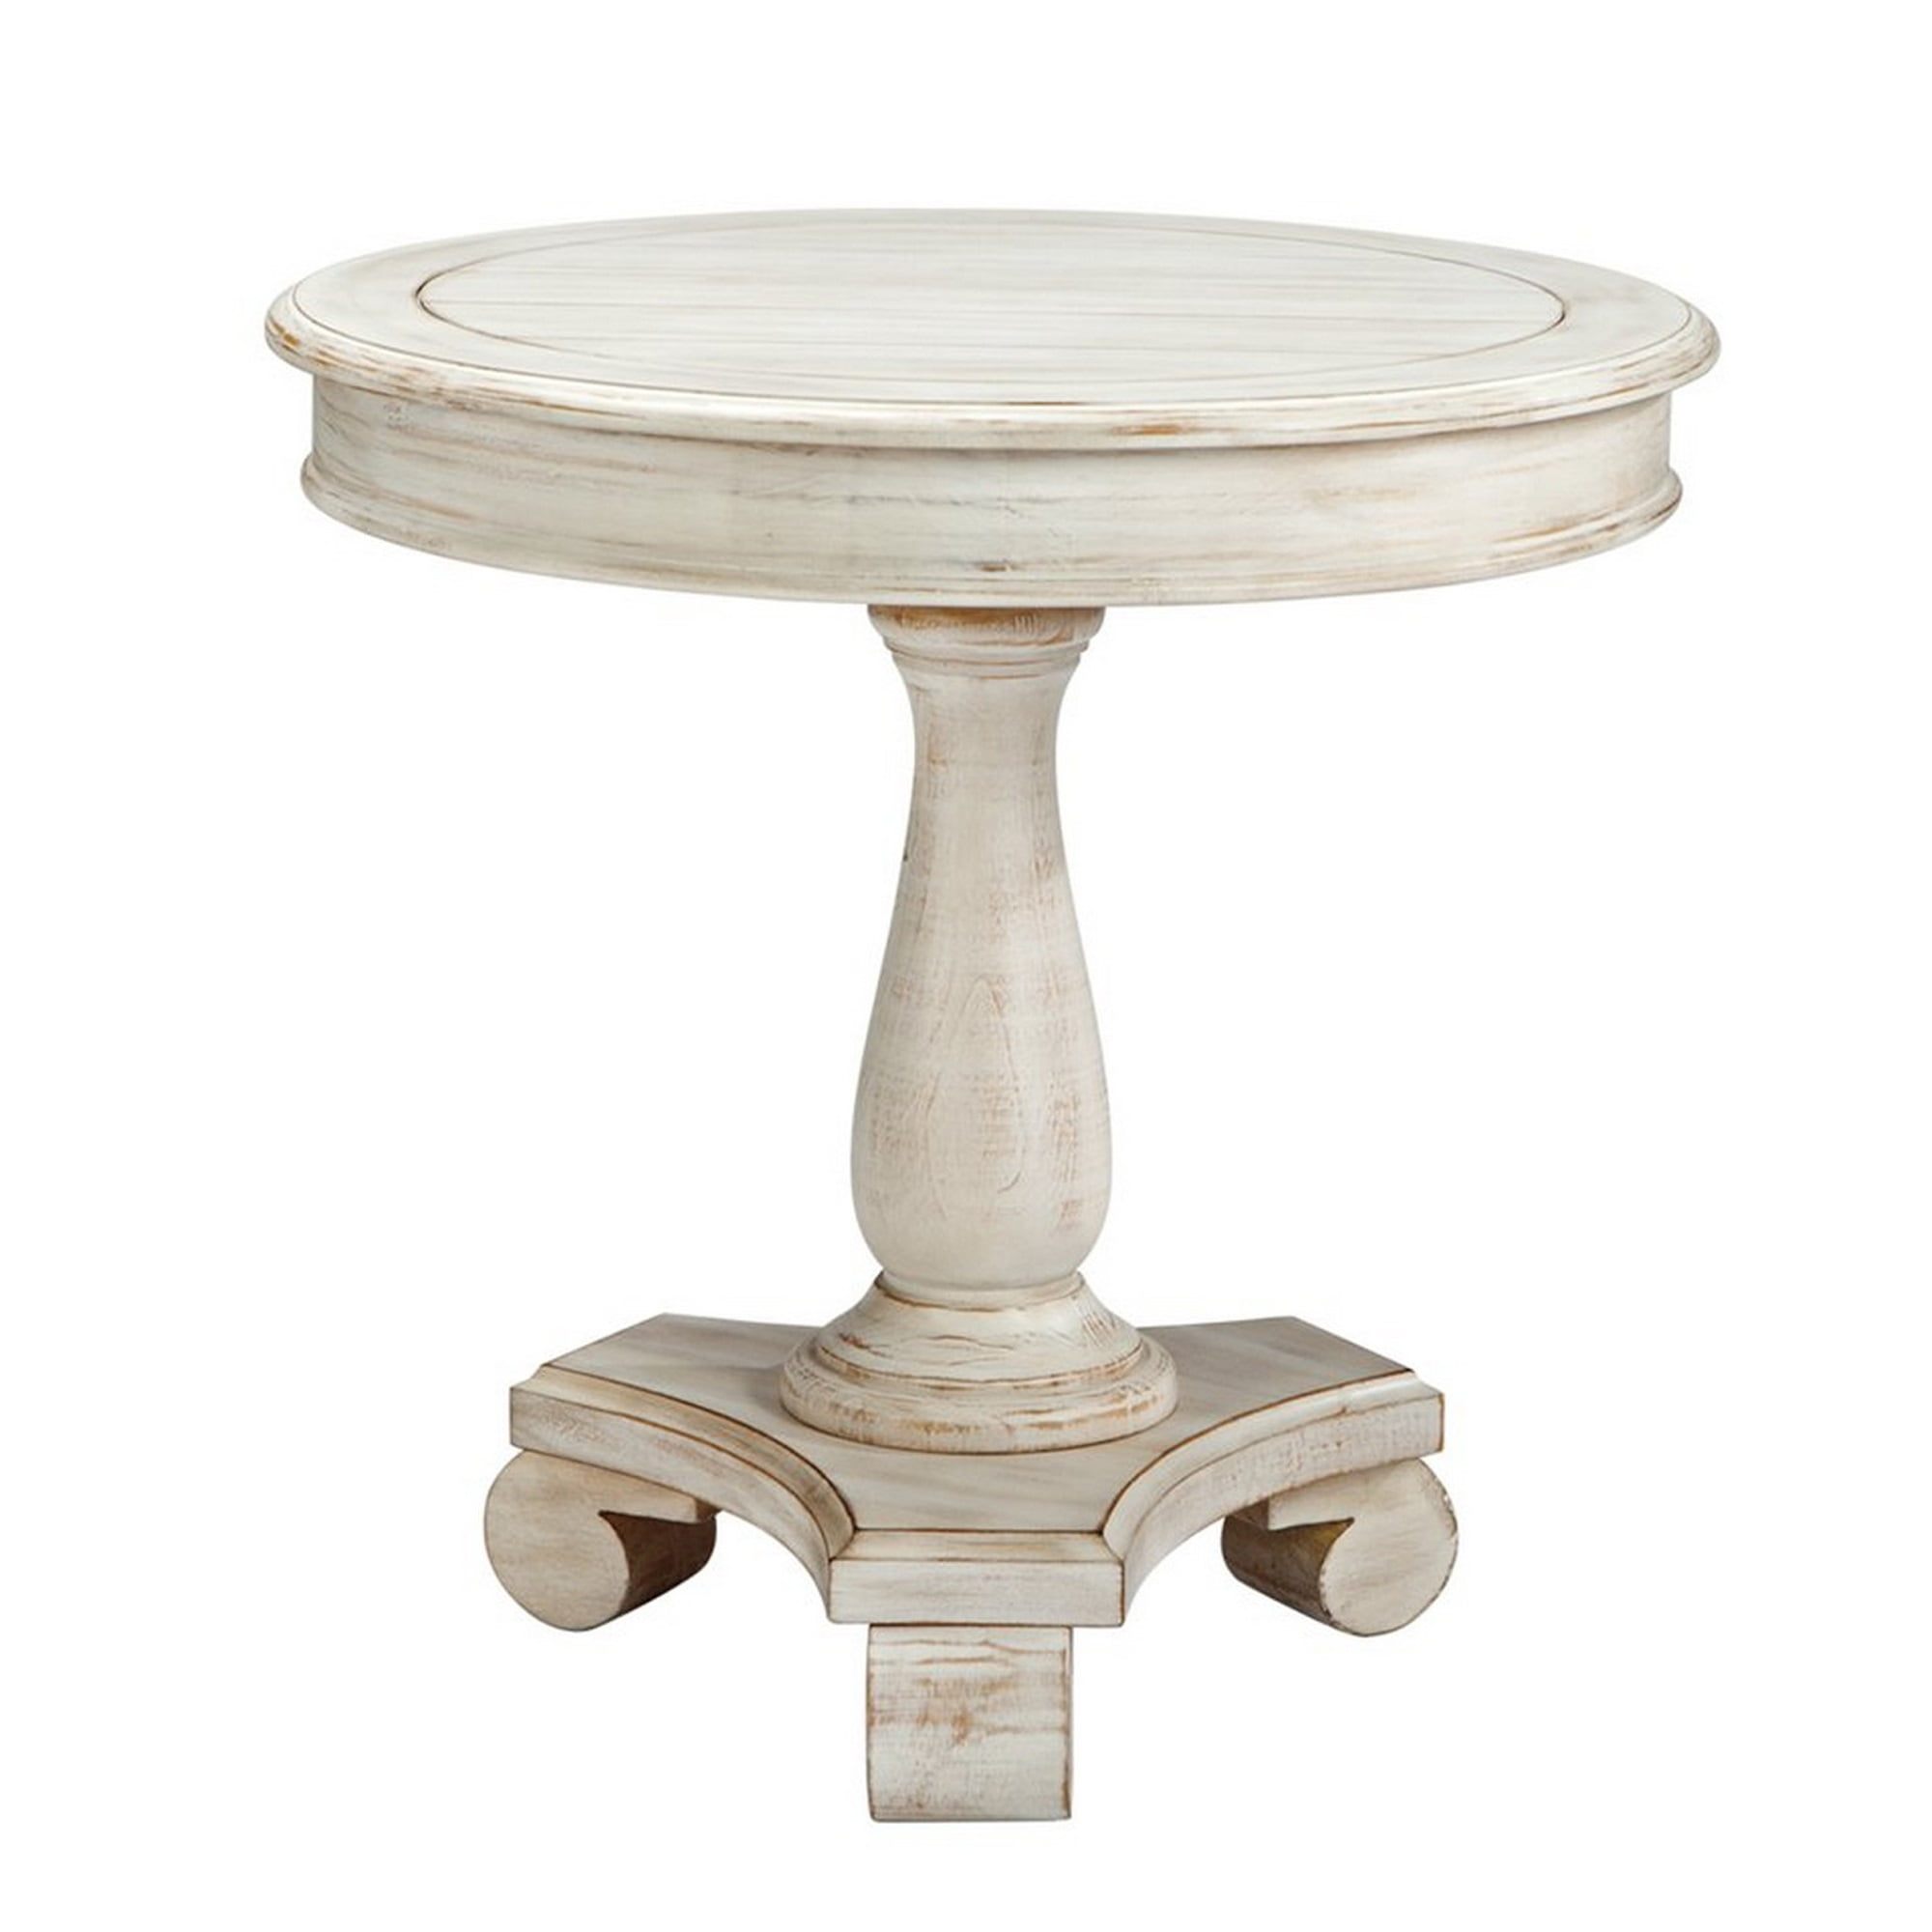 Benjara Wooden Rectangular Table with Sleek Curved Pedestal Style Feet Brown 